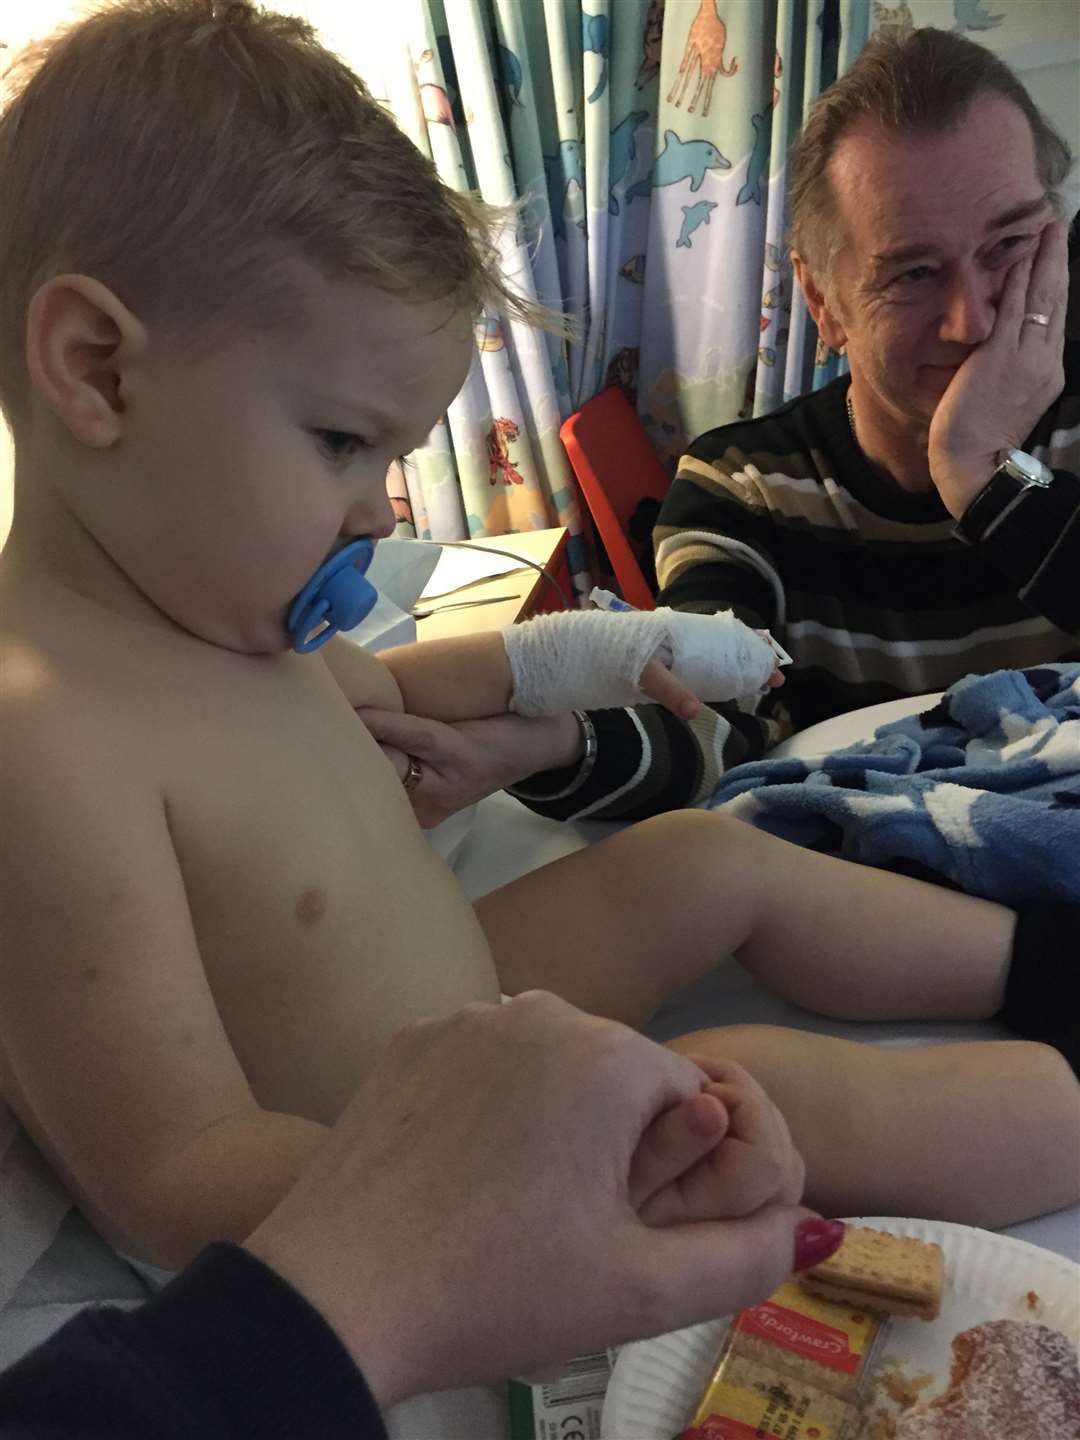 Callum Murray was diagnosed with acute lymphoblastic leukaemia two days before Christmas 2015